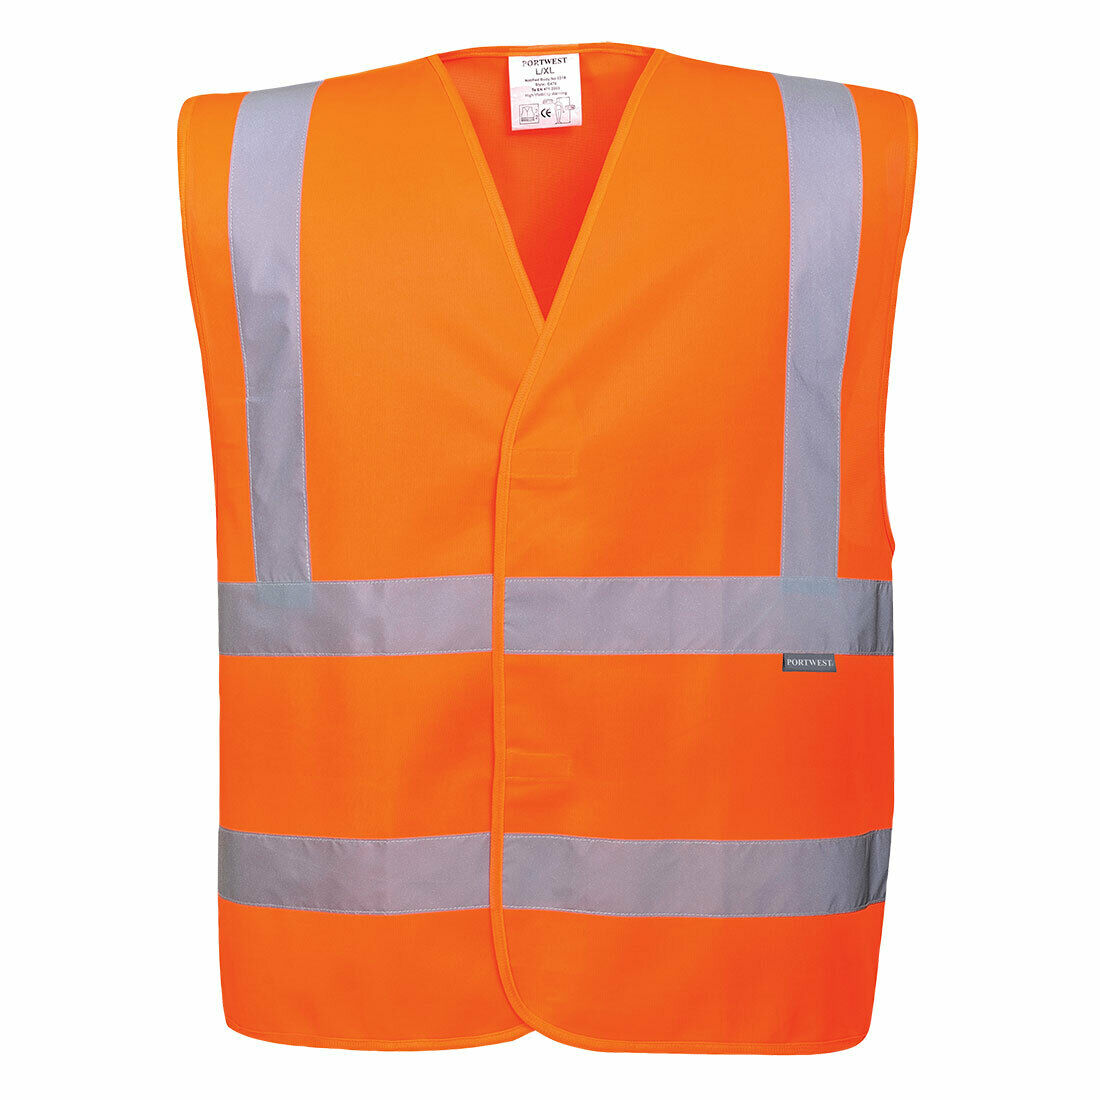 Portwest Mens Hi-Vis Two Band & Brace Vest Reflective Lightweight Work C470-Collins Clothing Co